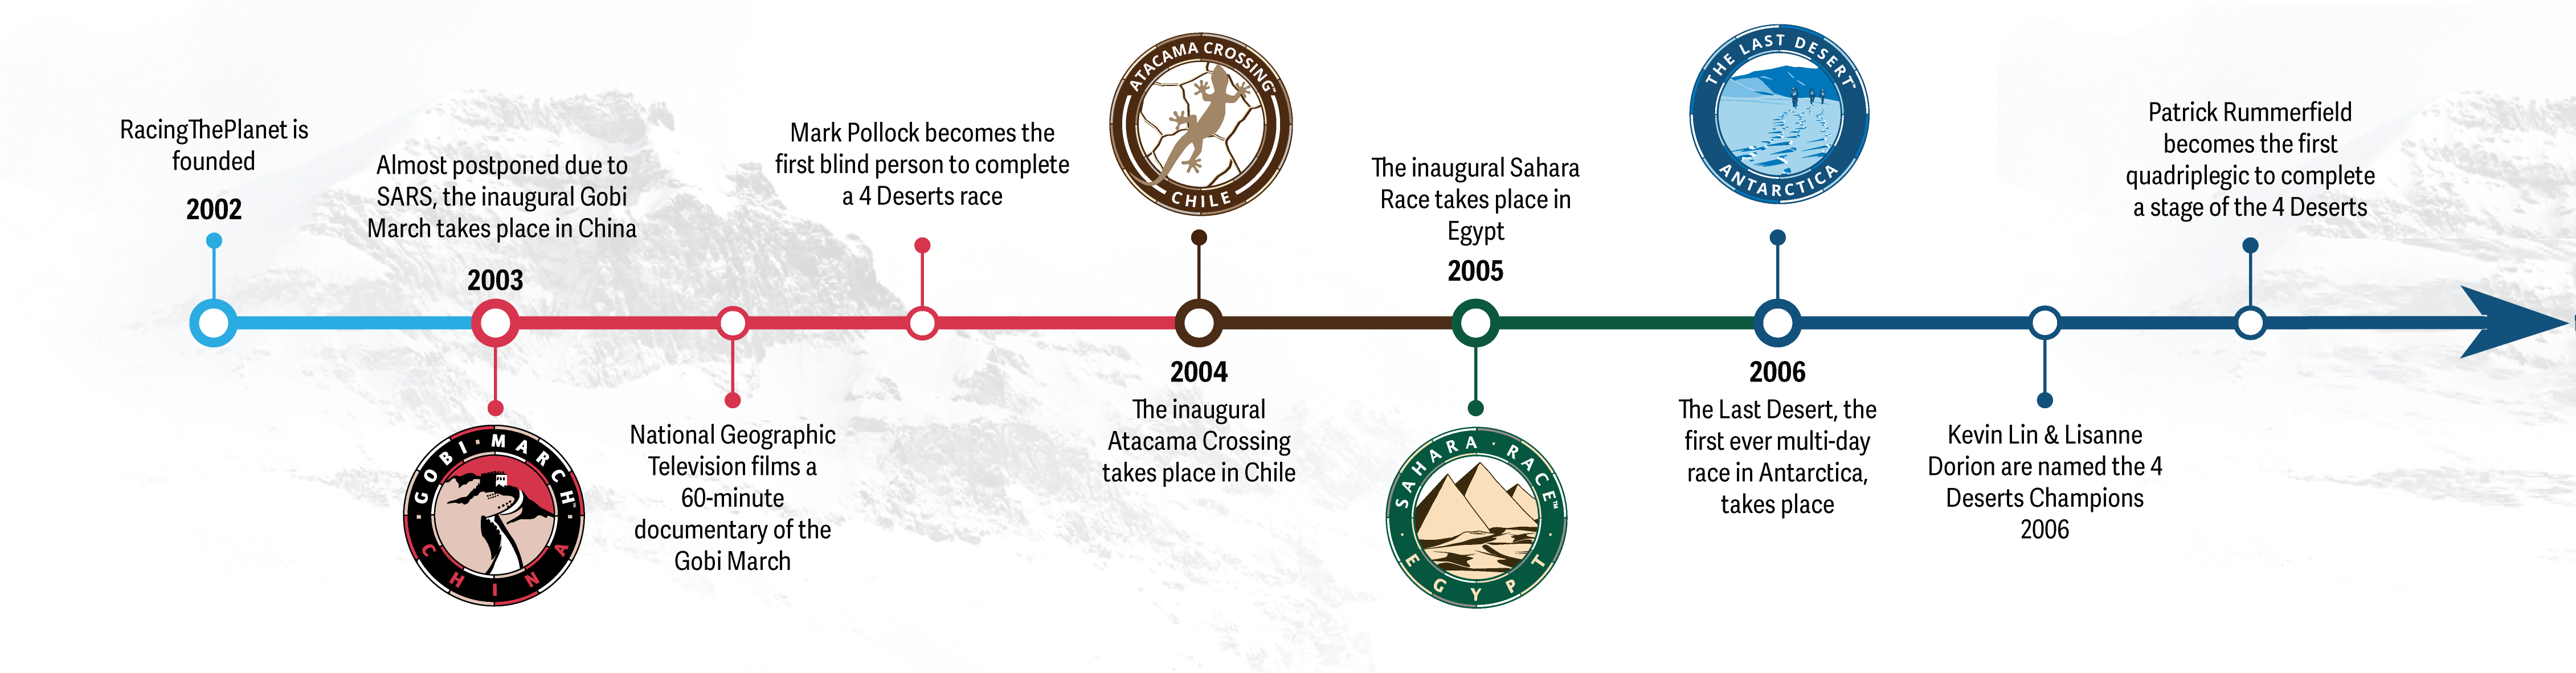 A timeline of RacingThePlanet's history